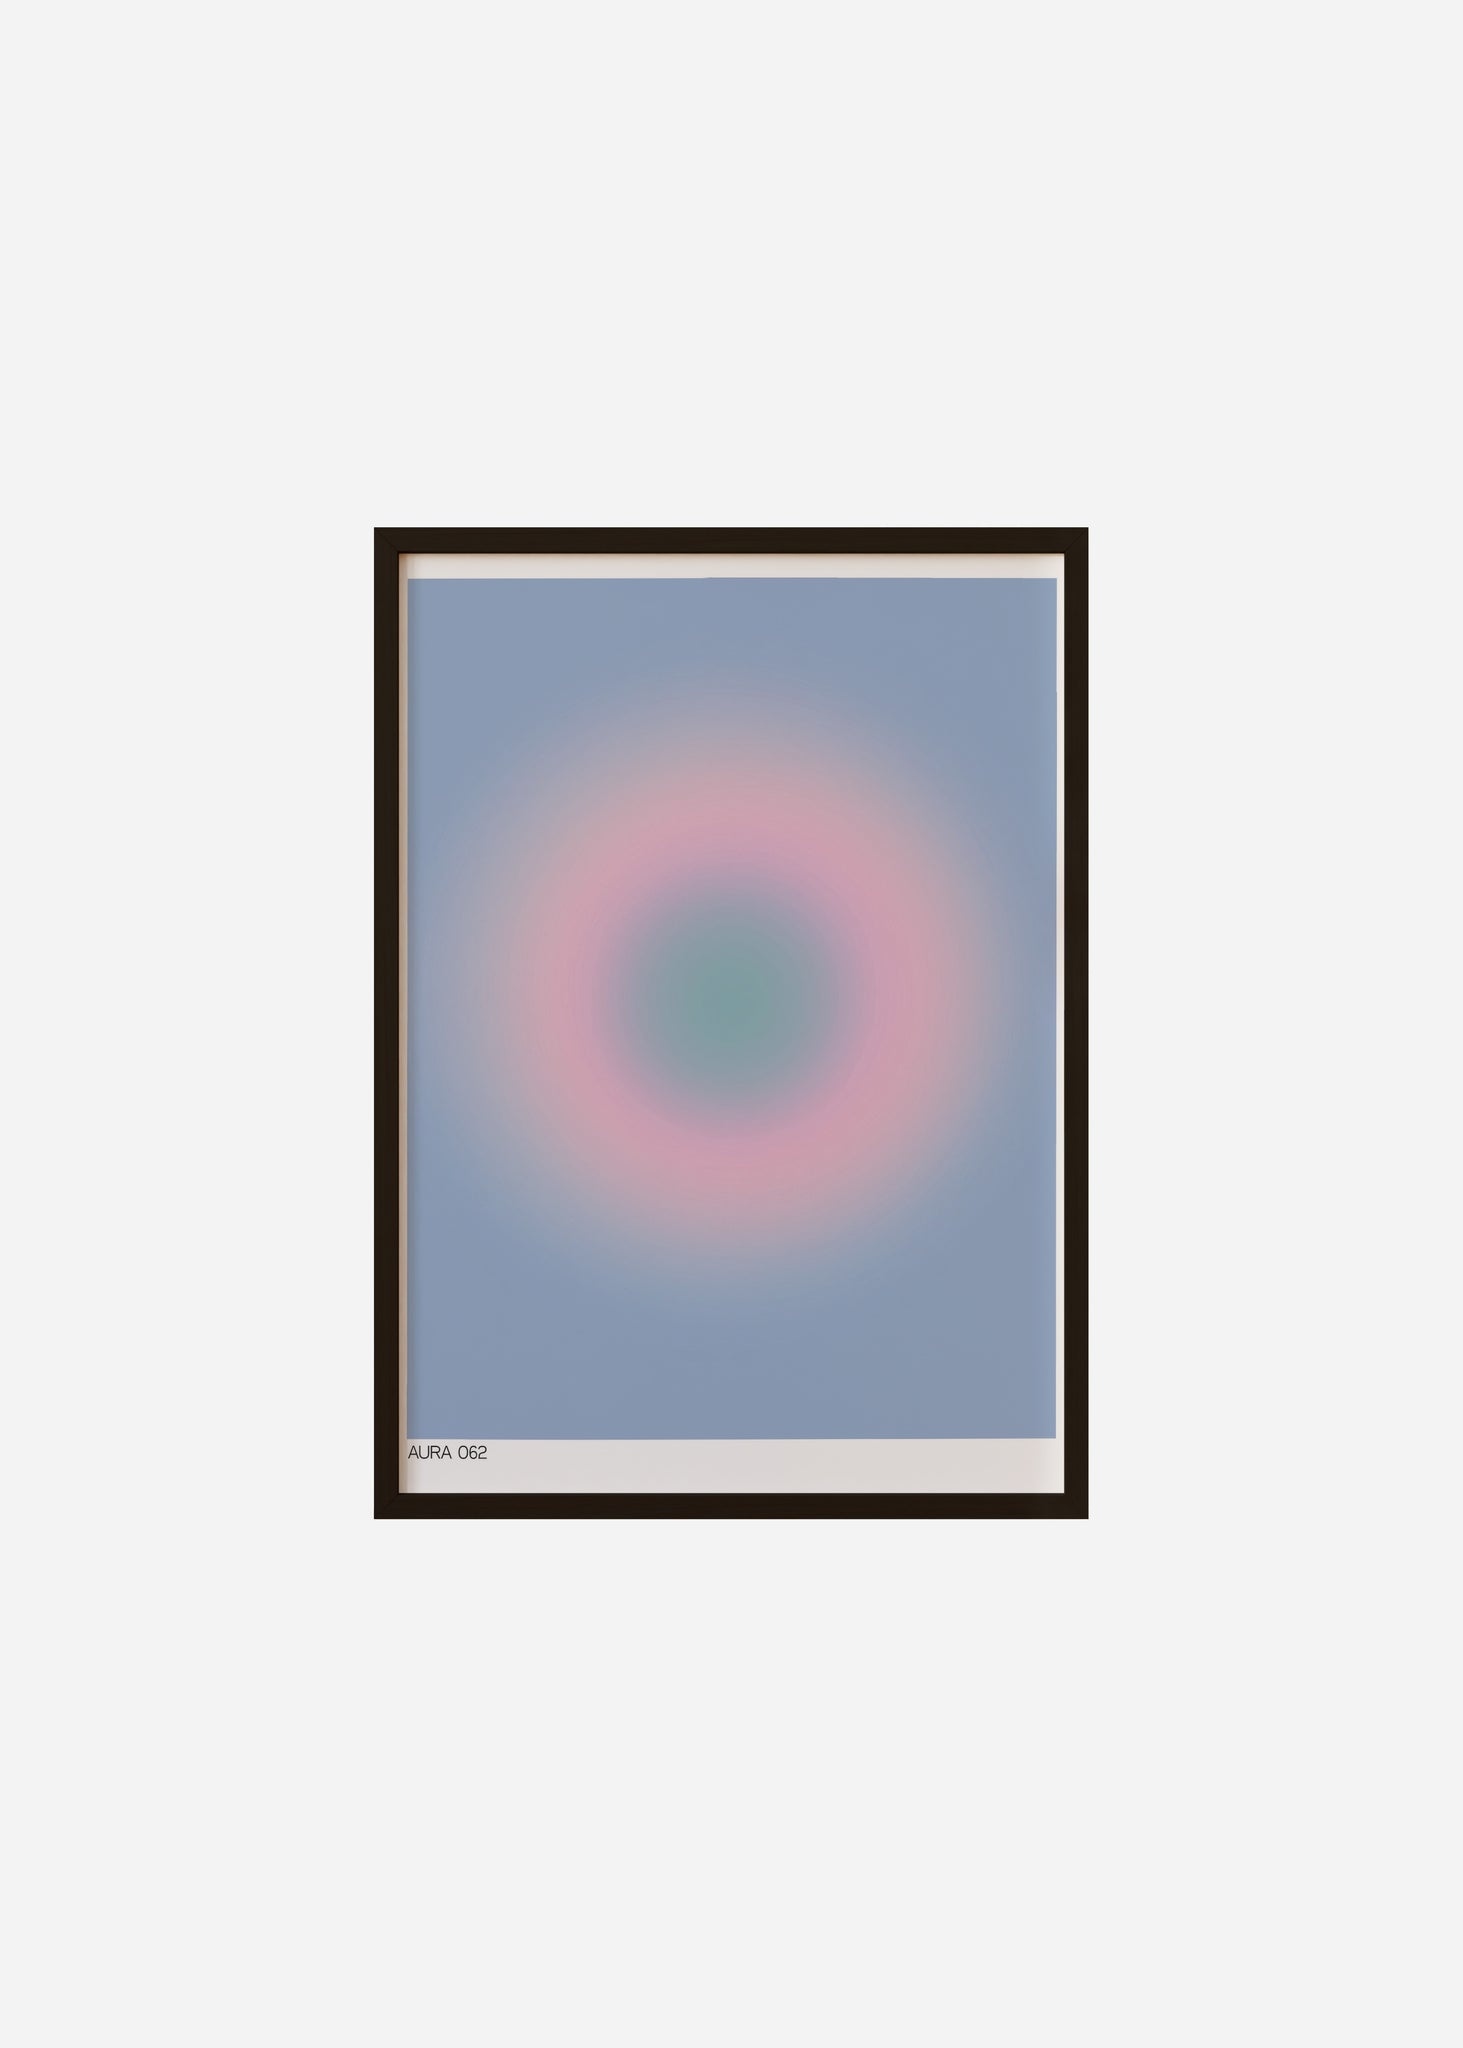 aura 062 Framed Print